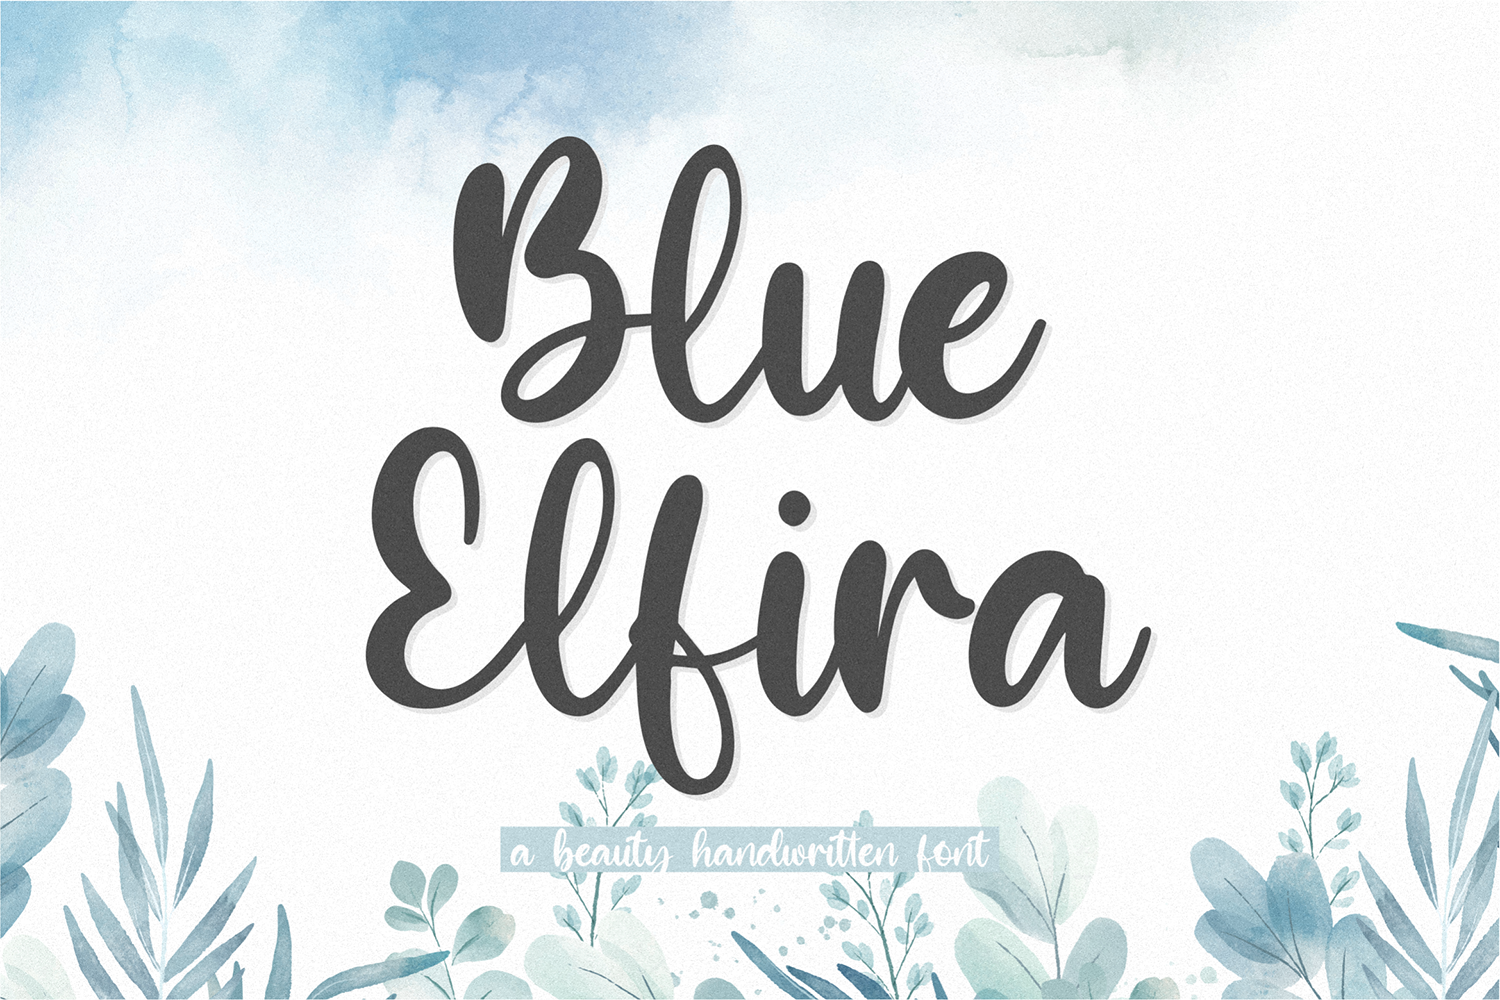 Blue Elfira Free Font